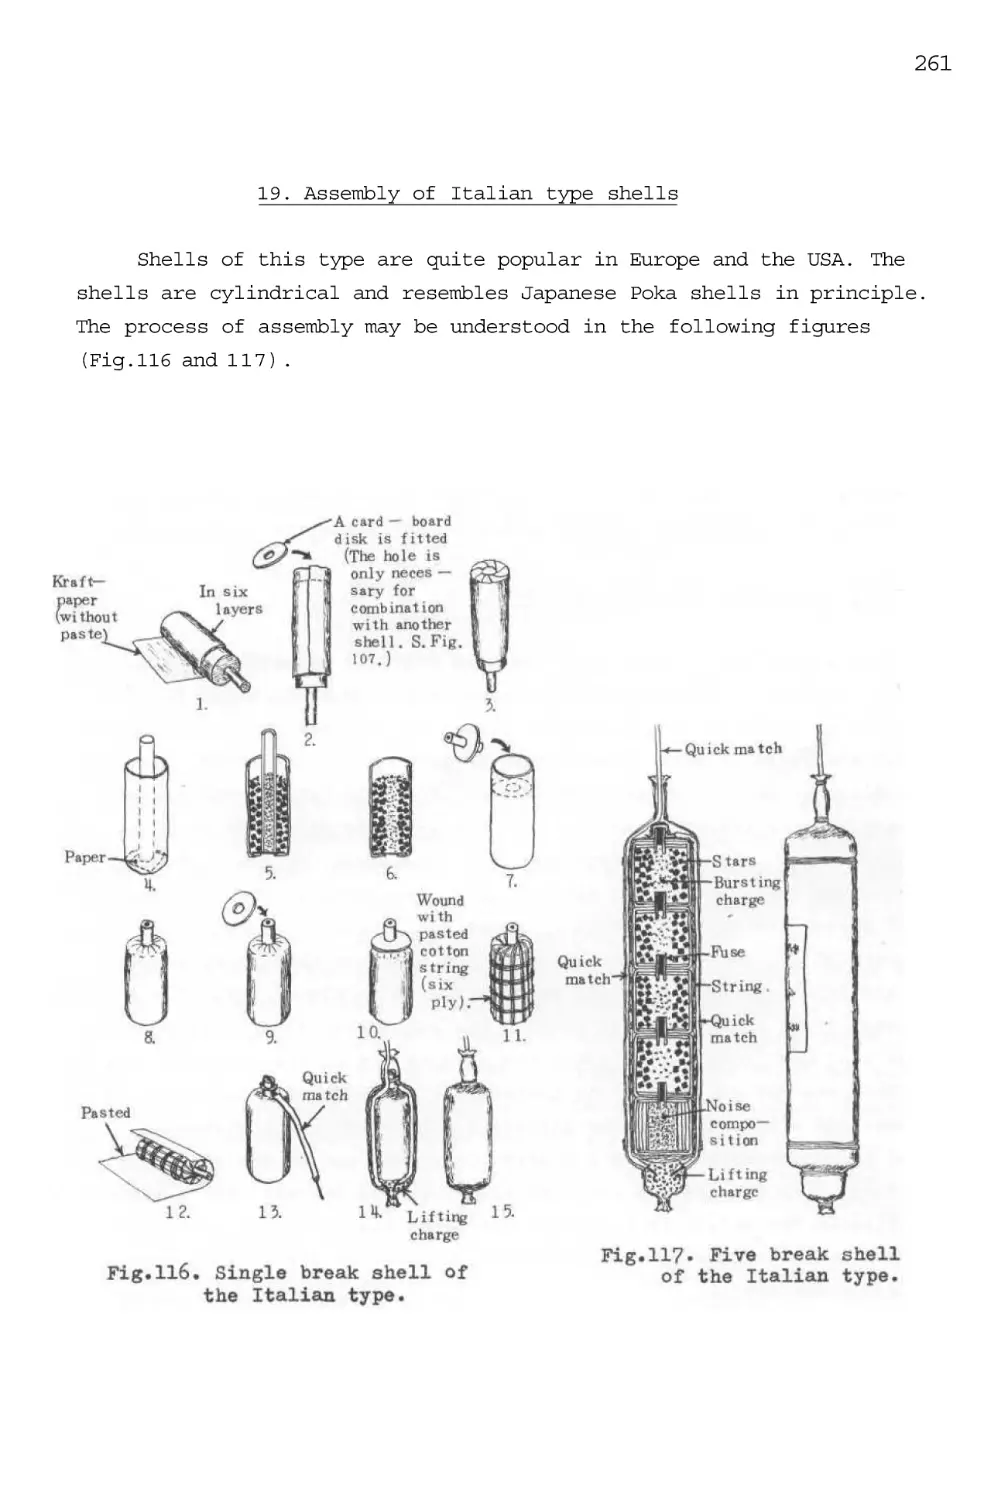 19. Assembly of Italian type shells